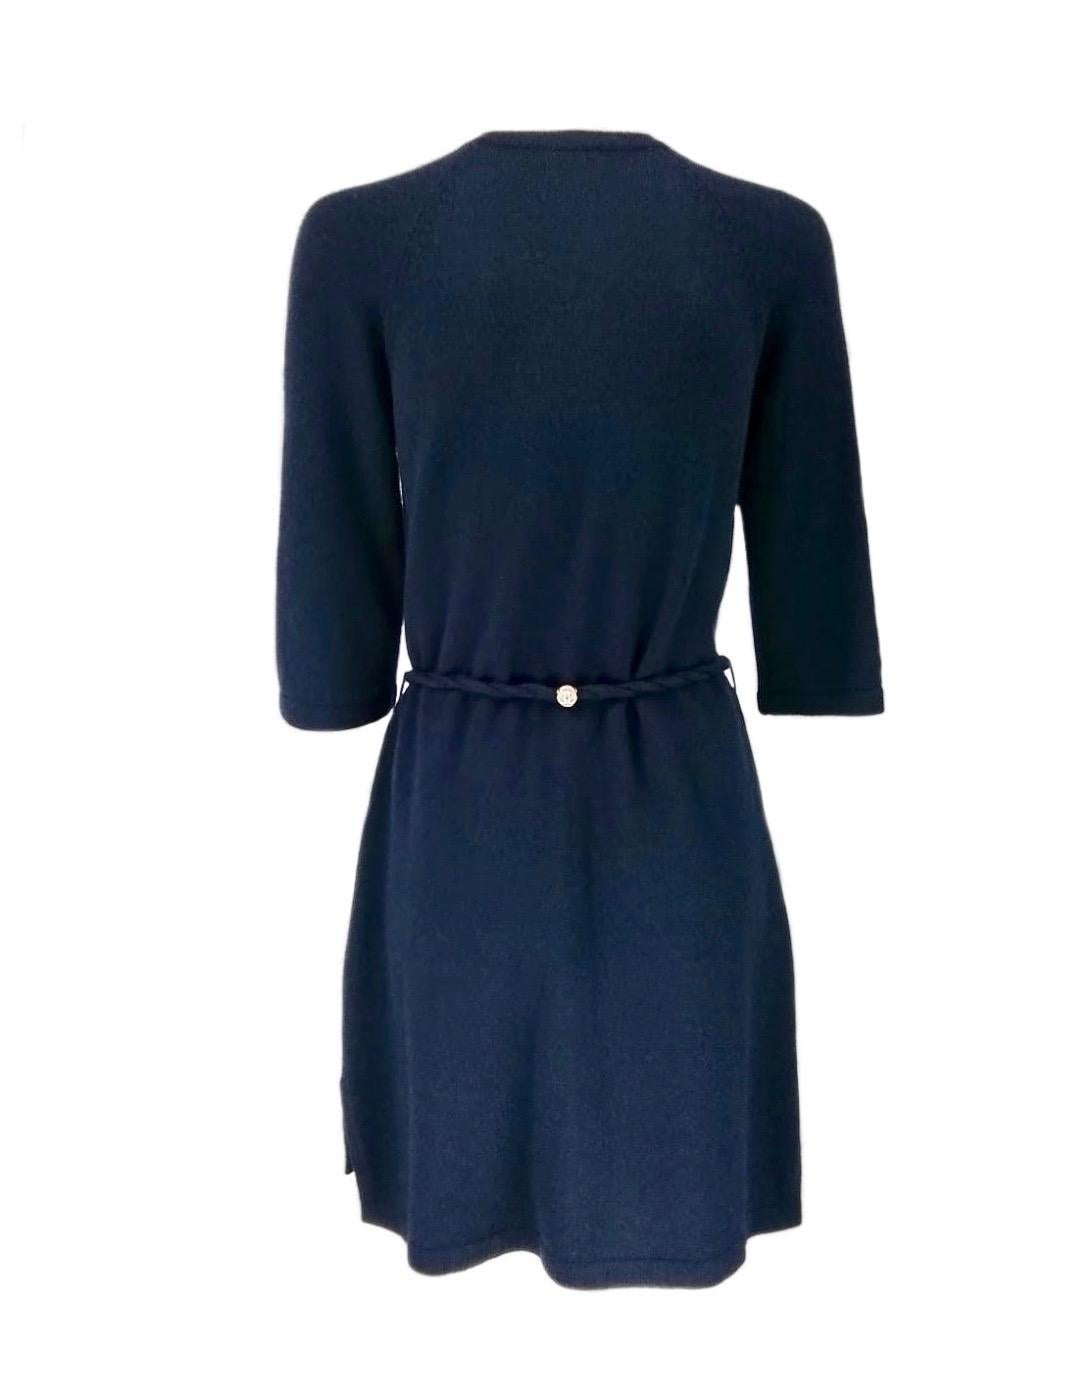 Chanel navy cashmere dress FR 36  18C For Sale 1